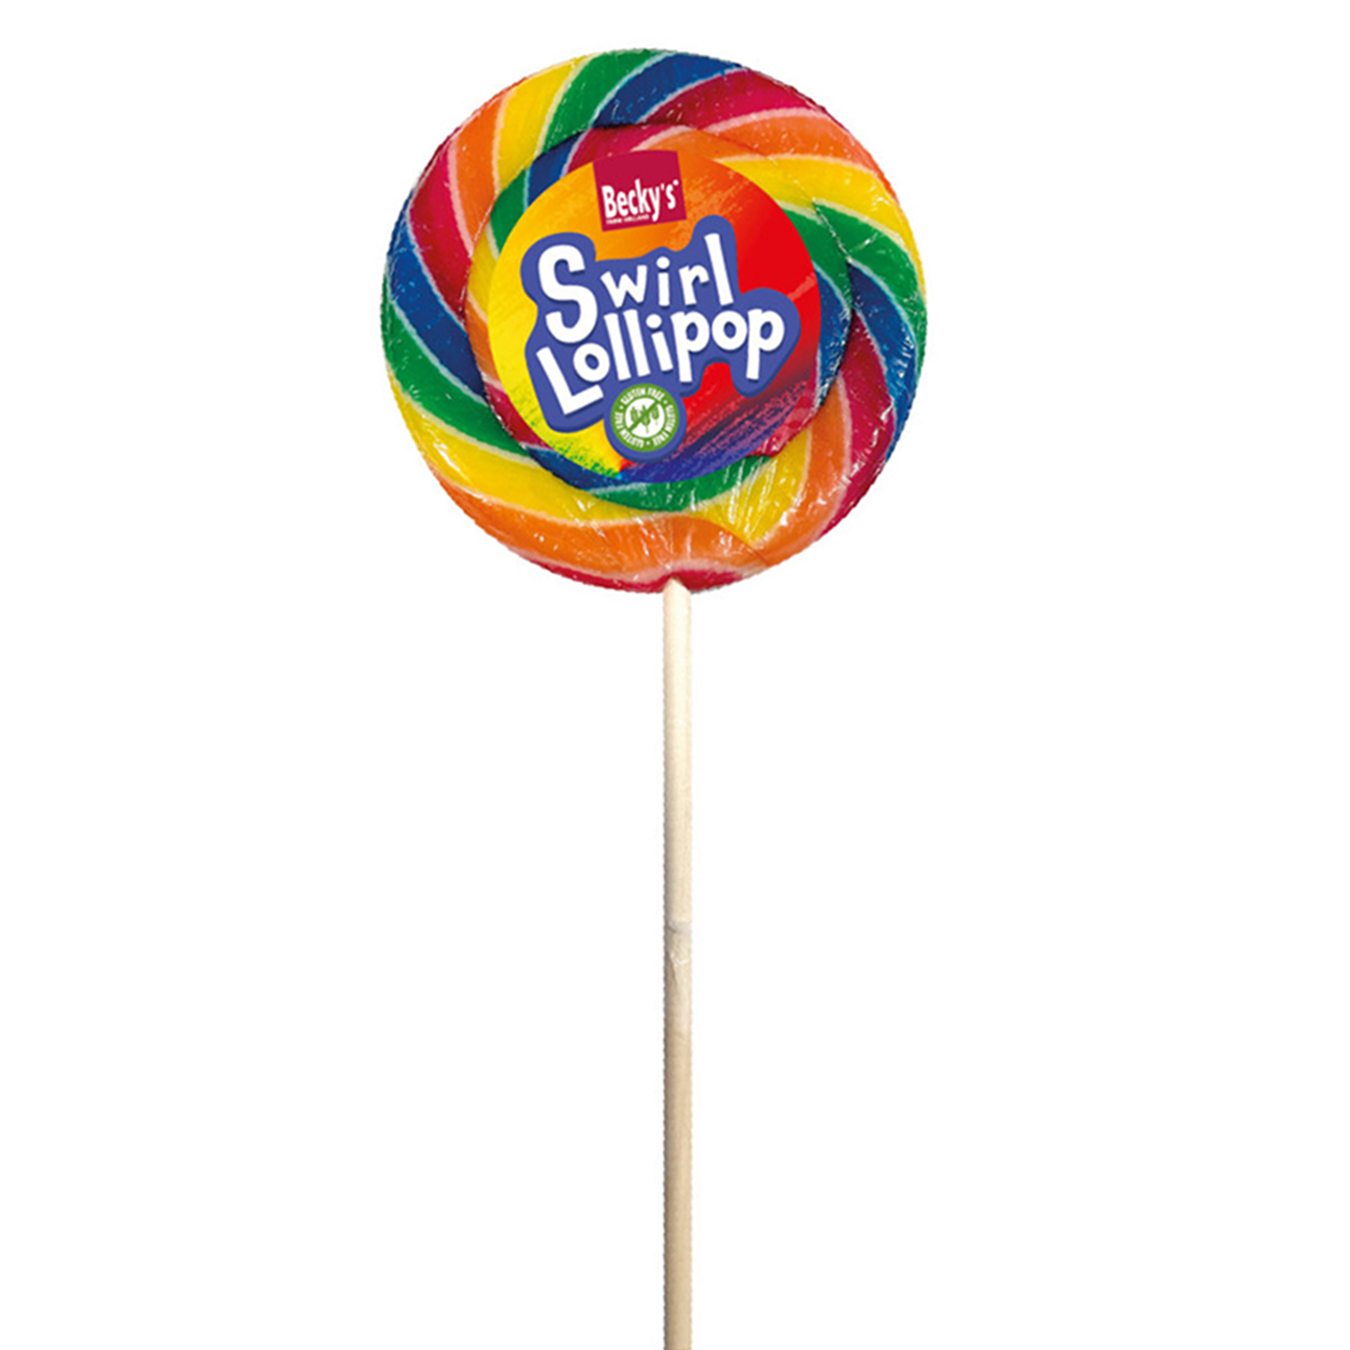 Becky's lollipop on a stick rainbow 80g